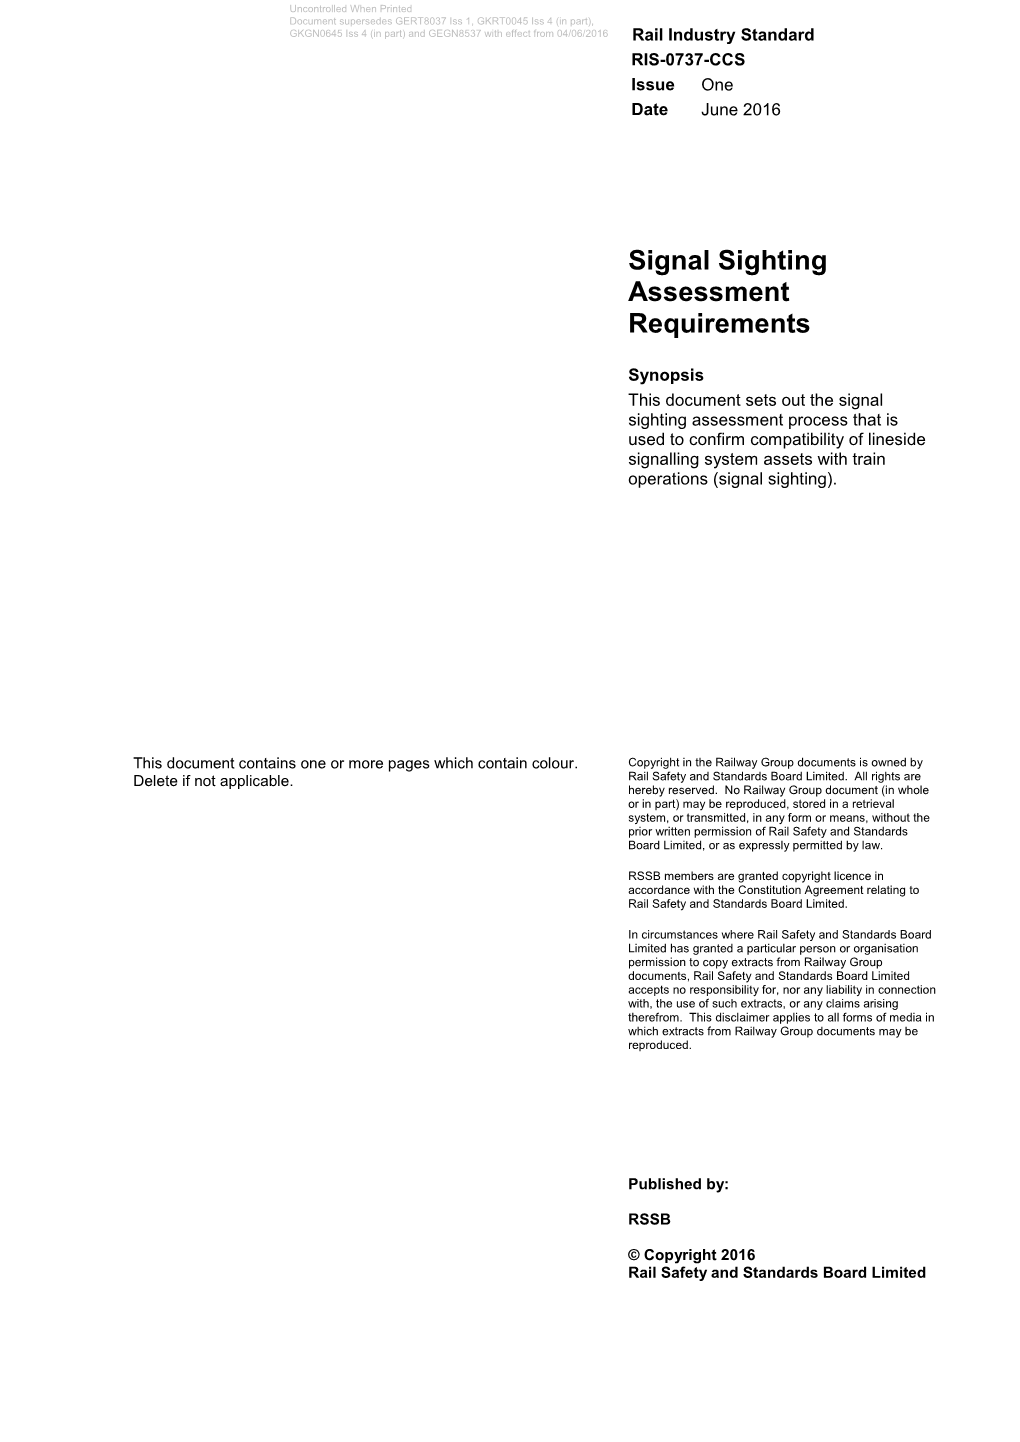 RIS-0737-CCS. Signal Sighting Assessment Requirements. 2016